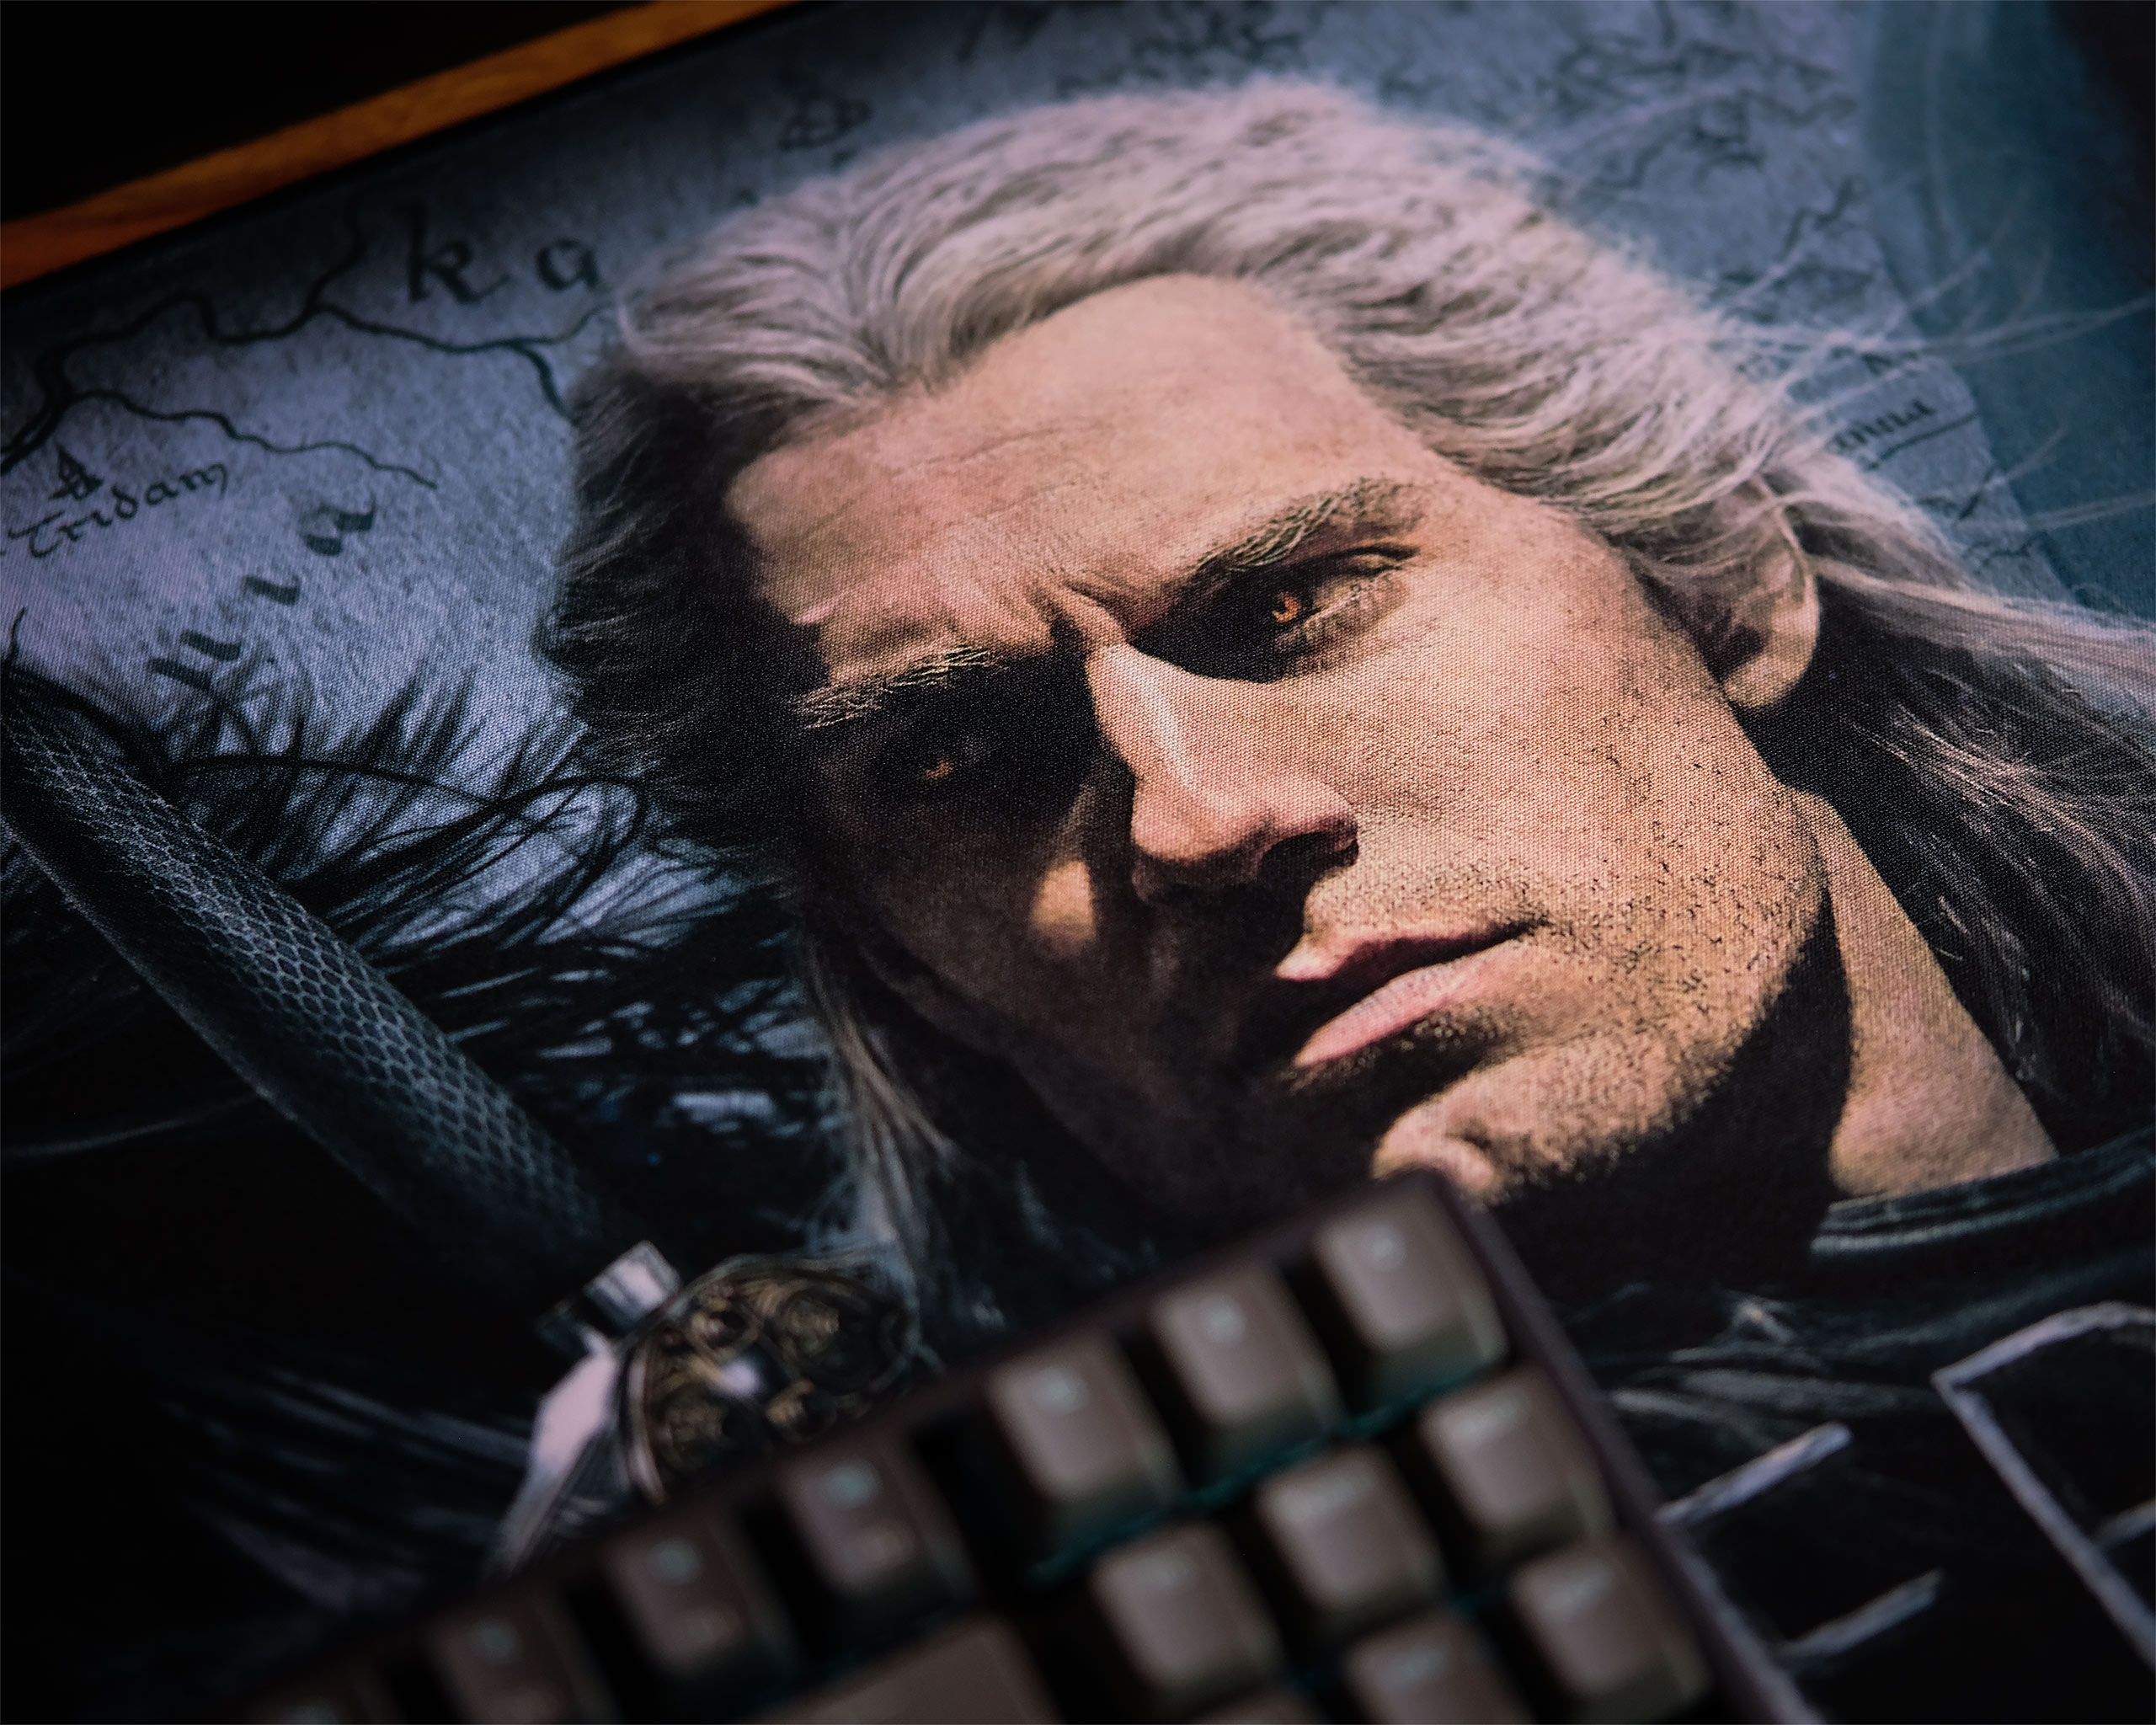 Witcher - Tapis de souris Geralt, Ciri et Yennefer